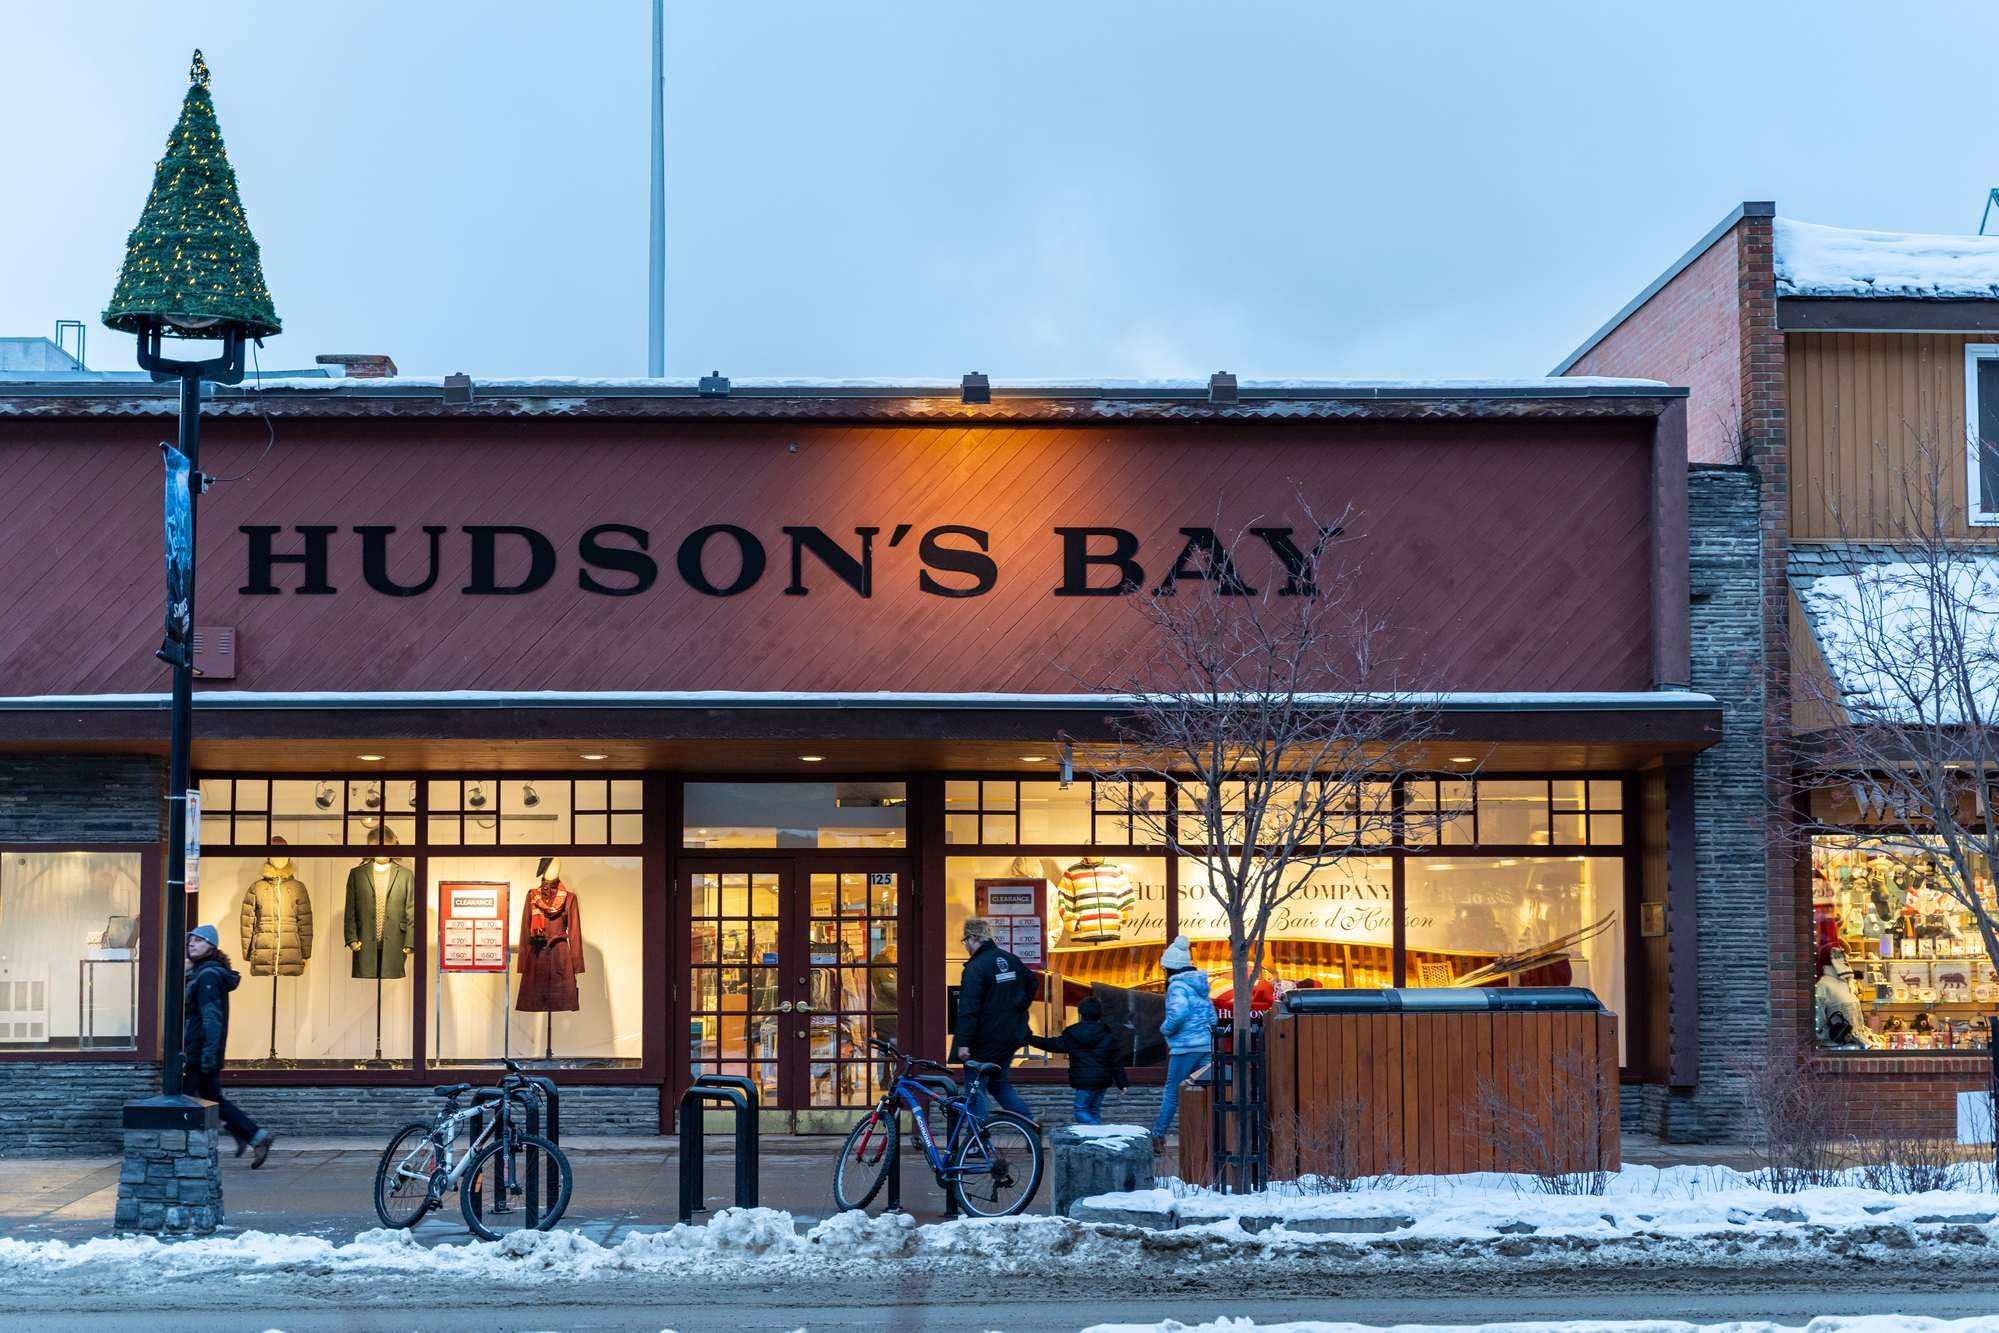 Hudson's Bay Company regarding the unpaid rent lawsuit filed against it